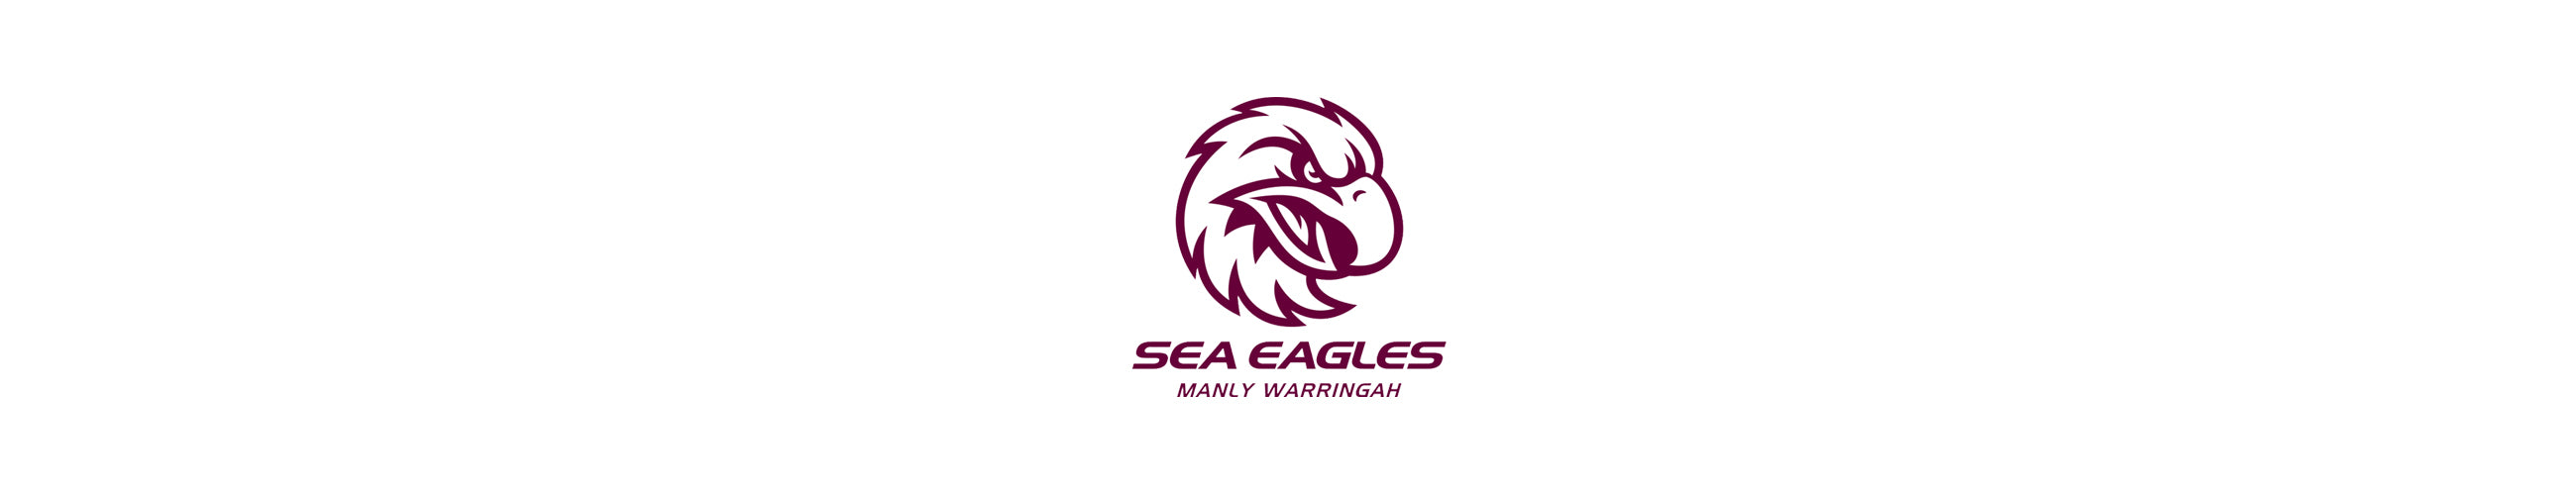 manly sea eagles merchandise